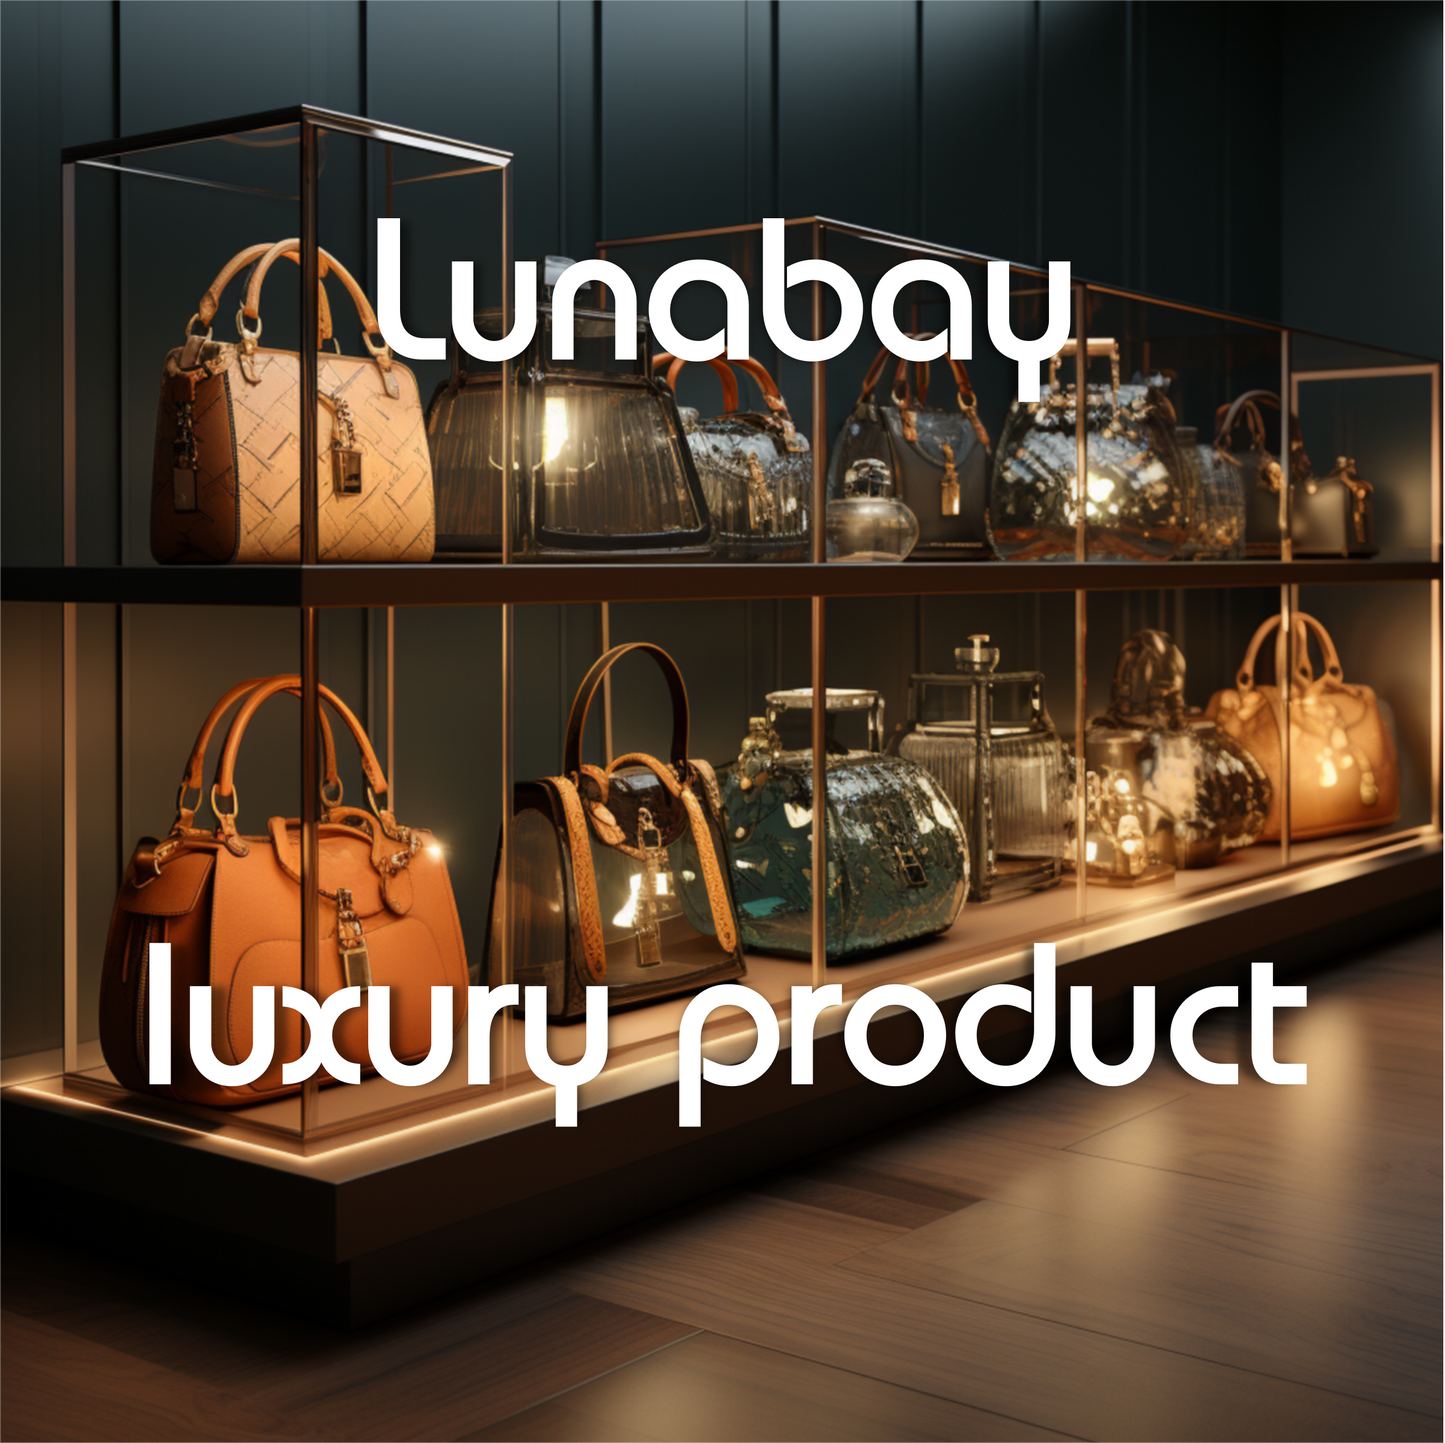 Lunabay luxury product crazy sale